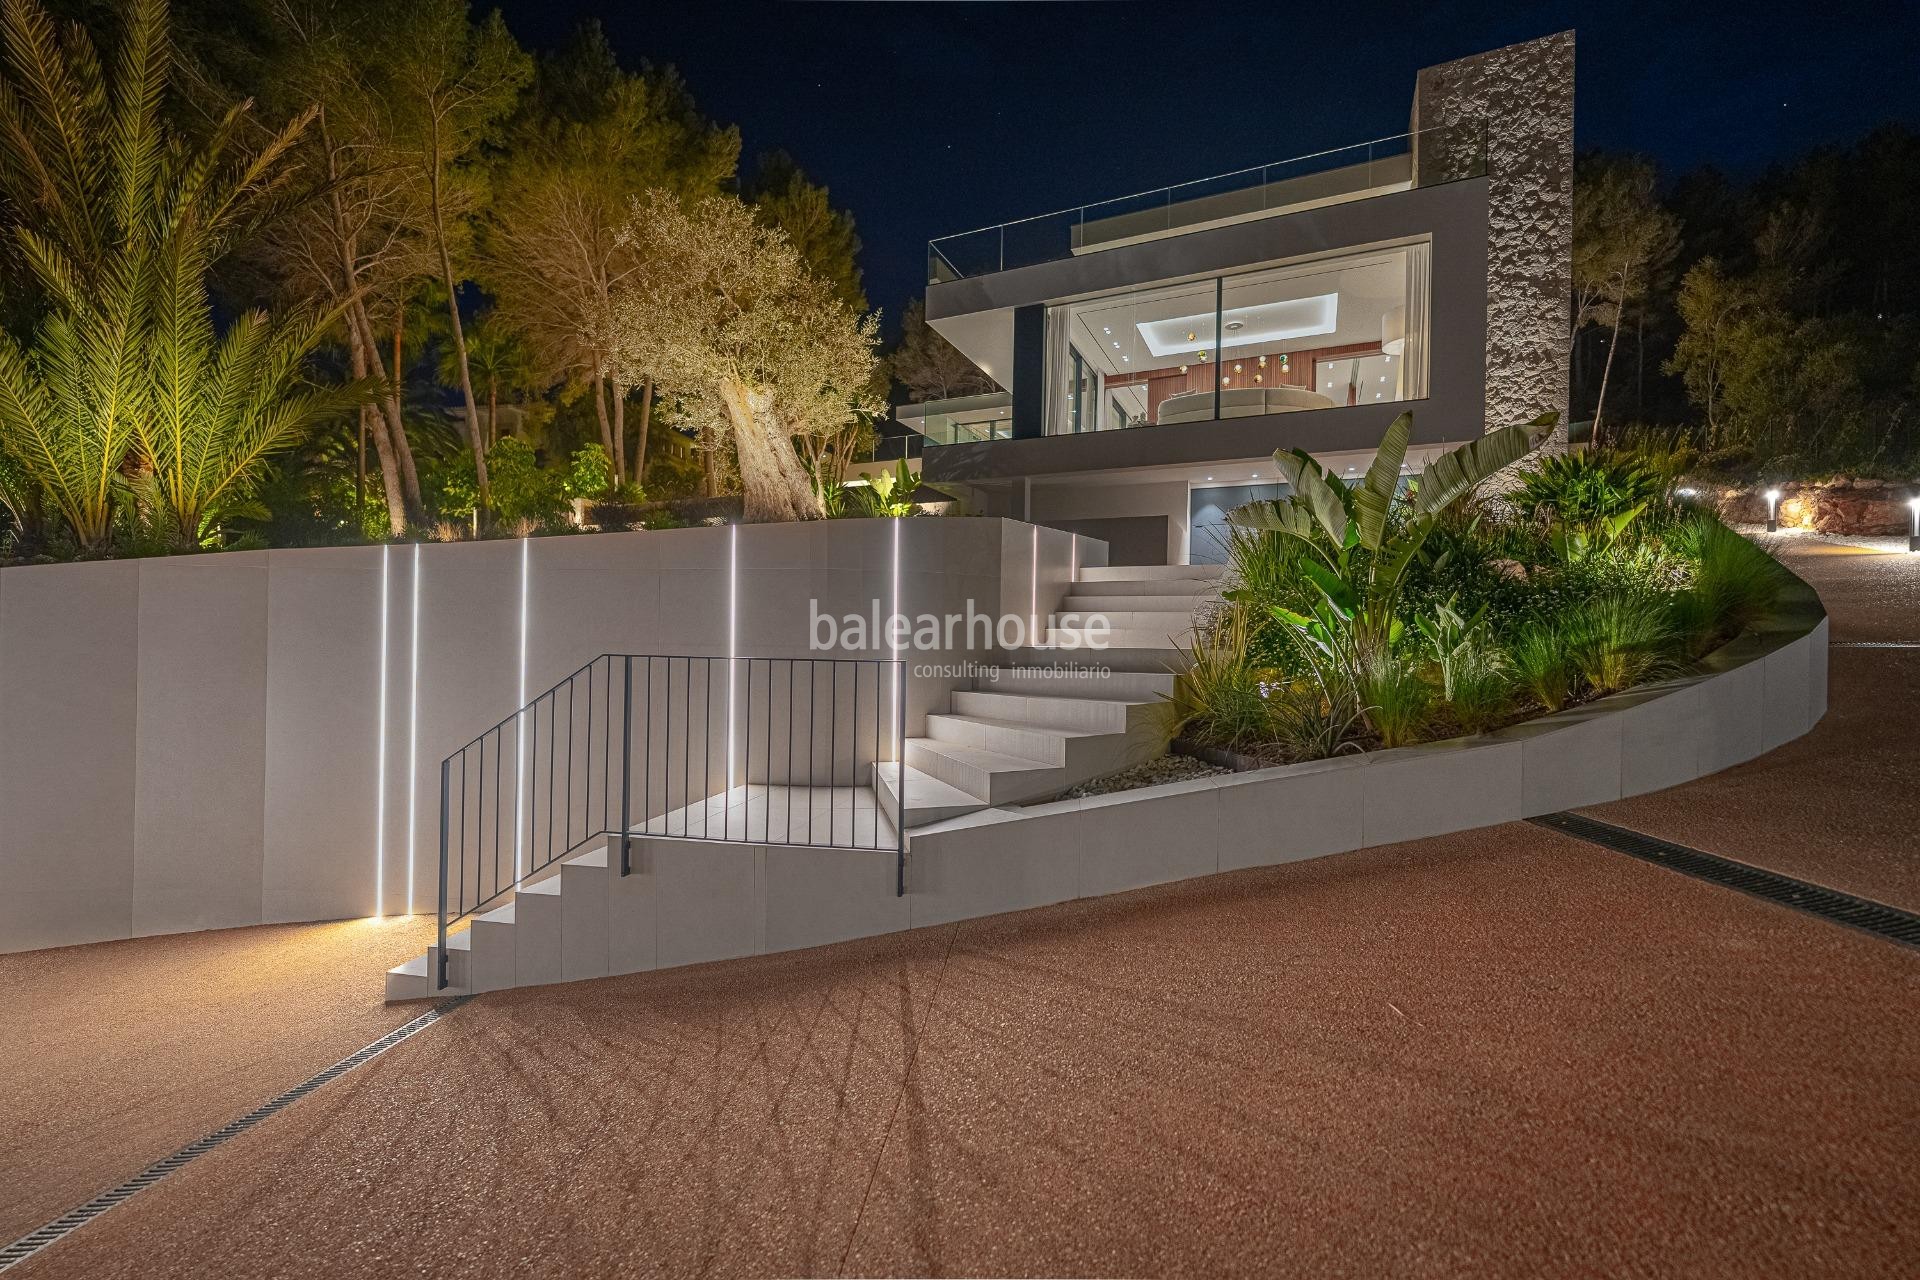 Spectacular avant-garde villa with large outdoor garden spaces and terraces in Son Vida